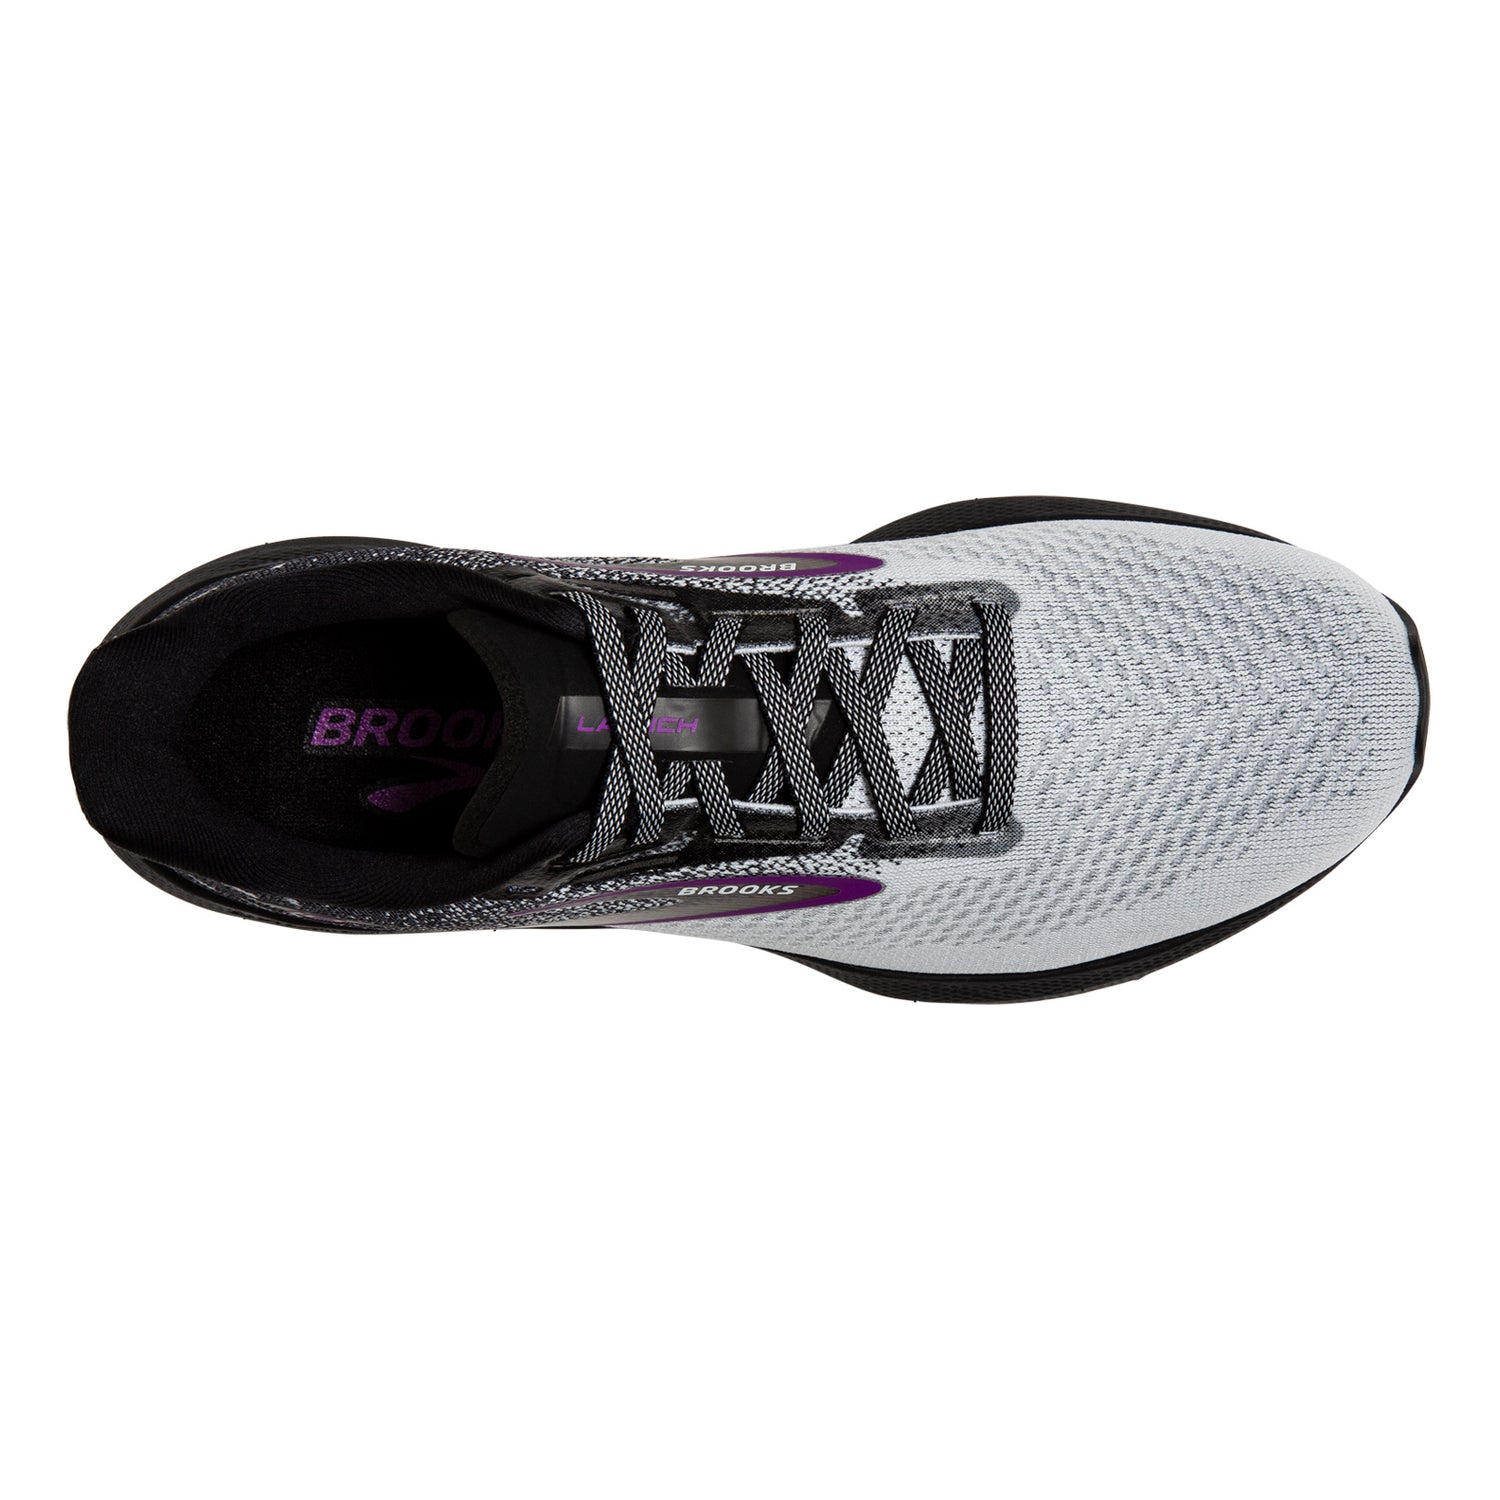 Peltz Shoes  Women's Brooks Launch 10 Running Shoe Black/White/Violet 120398 1B 085